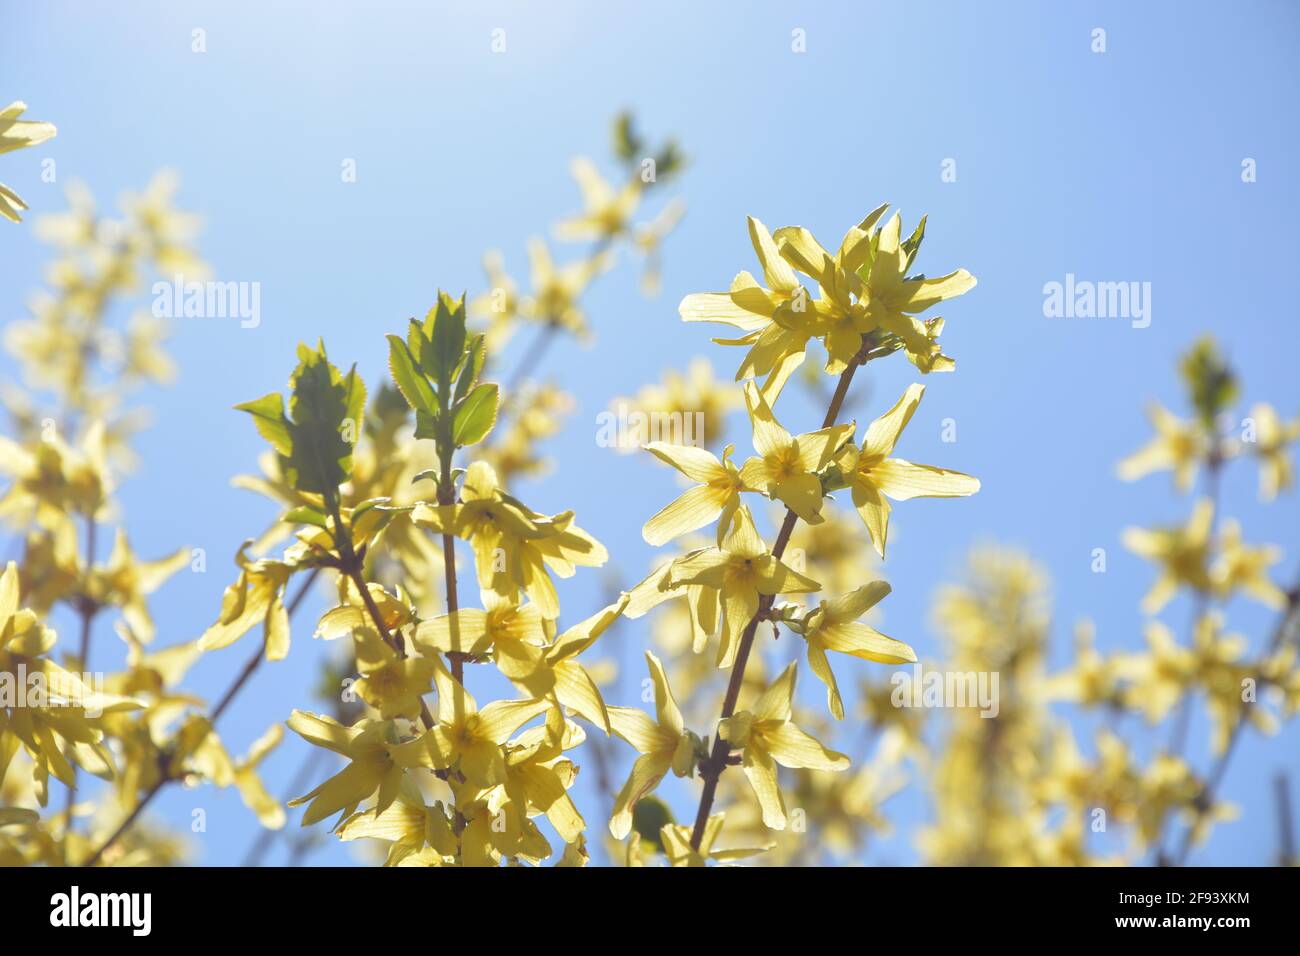 Forsythia High Resolution, Yellow Forsythia Flowers backlit Stock Photo, DSLR Stock Photo